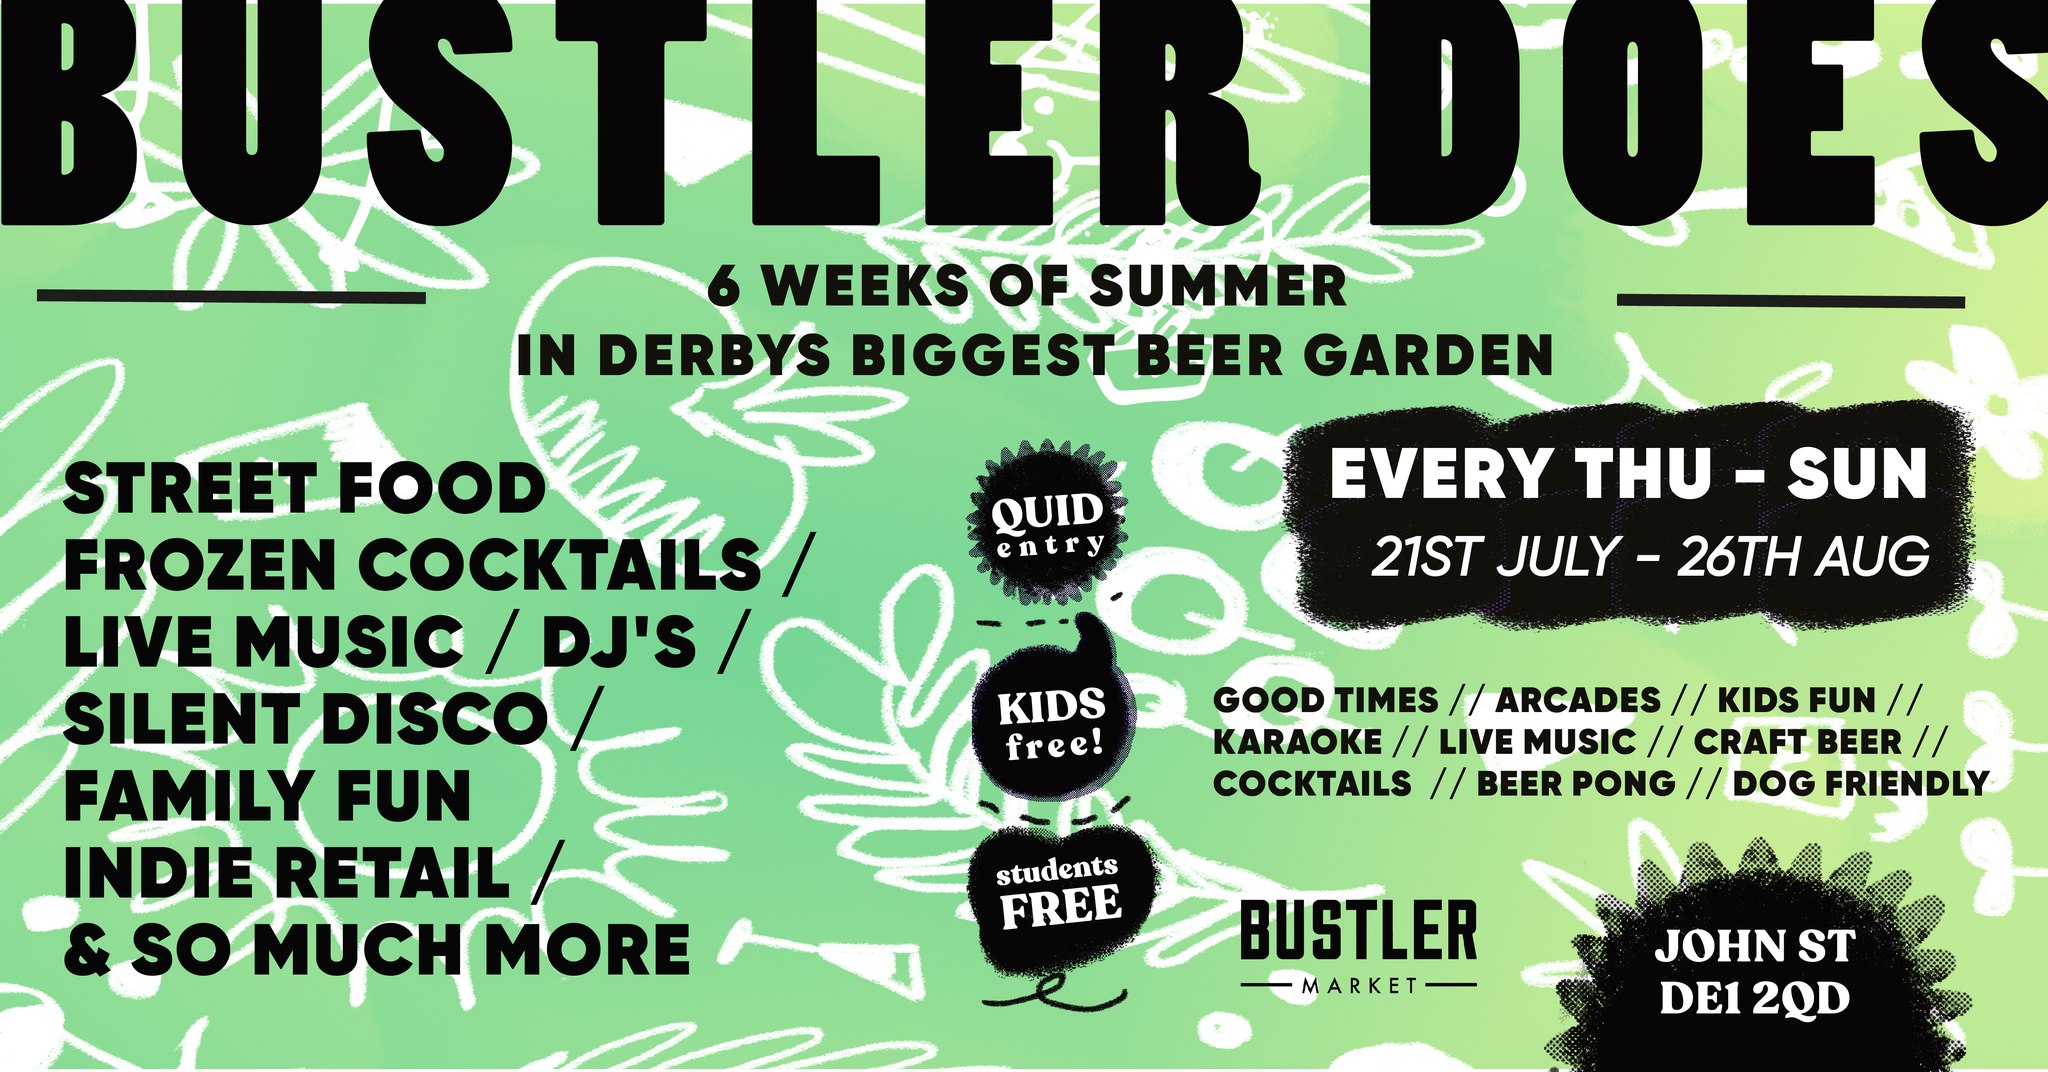 Bustler - Six Weeks of Summer - Week 6 - Derby Days Out